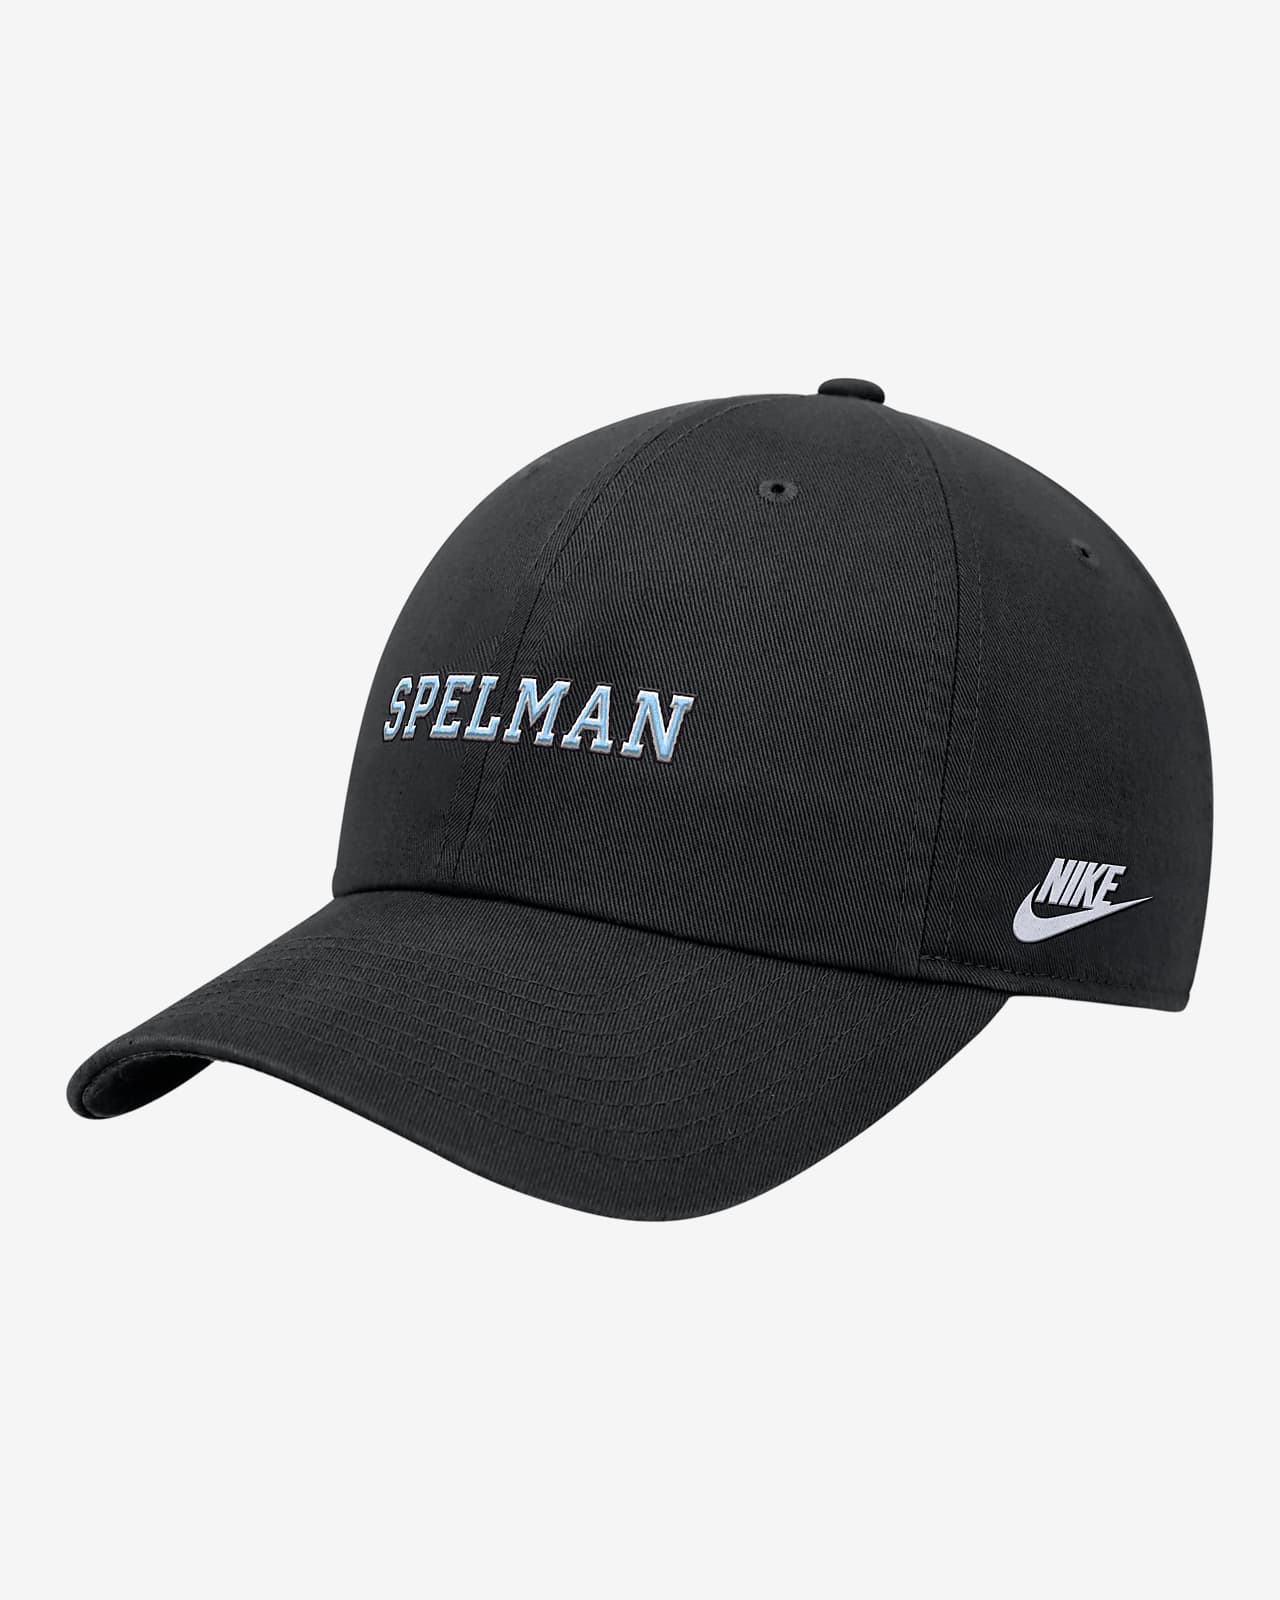 Gorra universitaria Nike ajustable Spelman